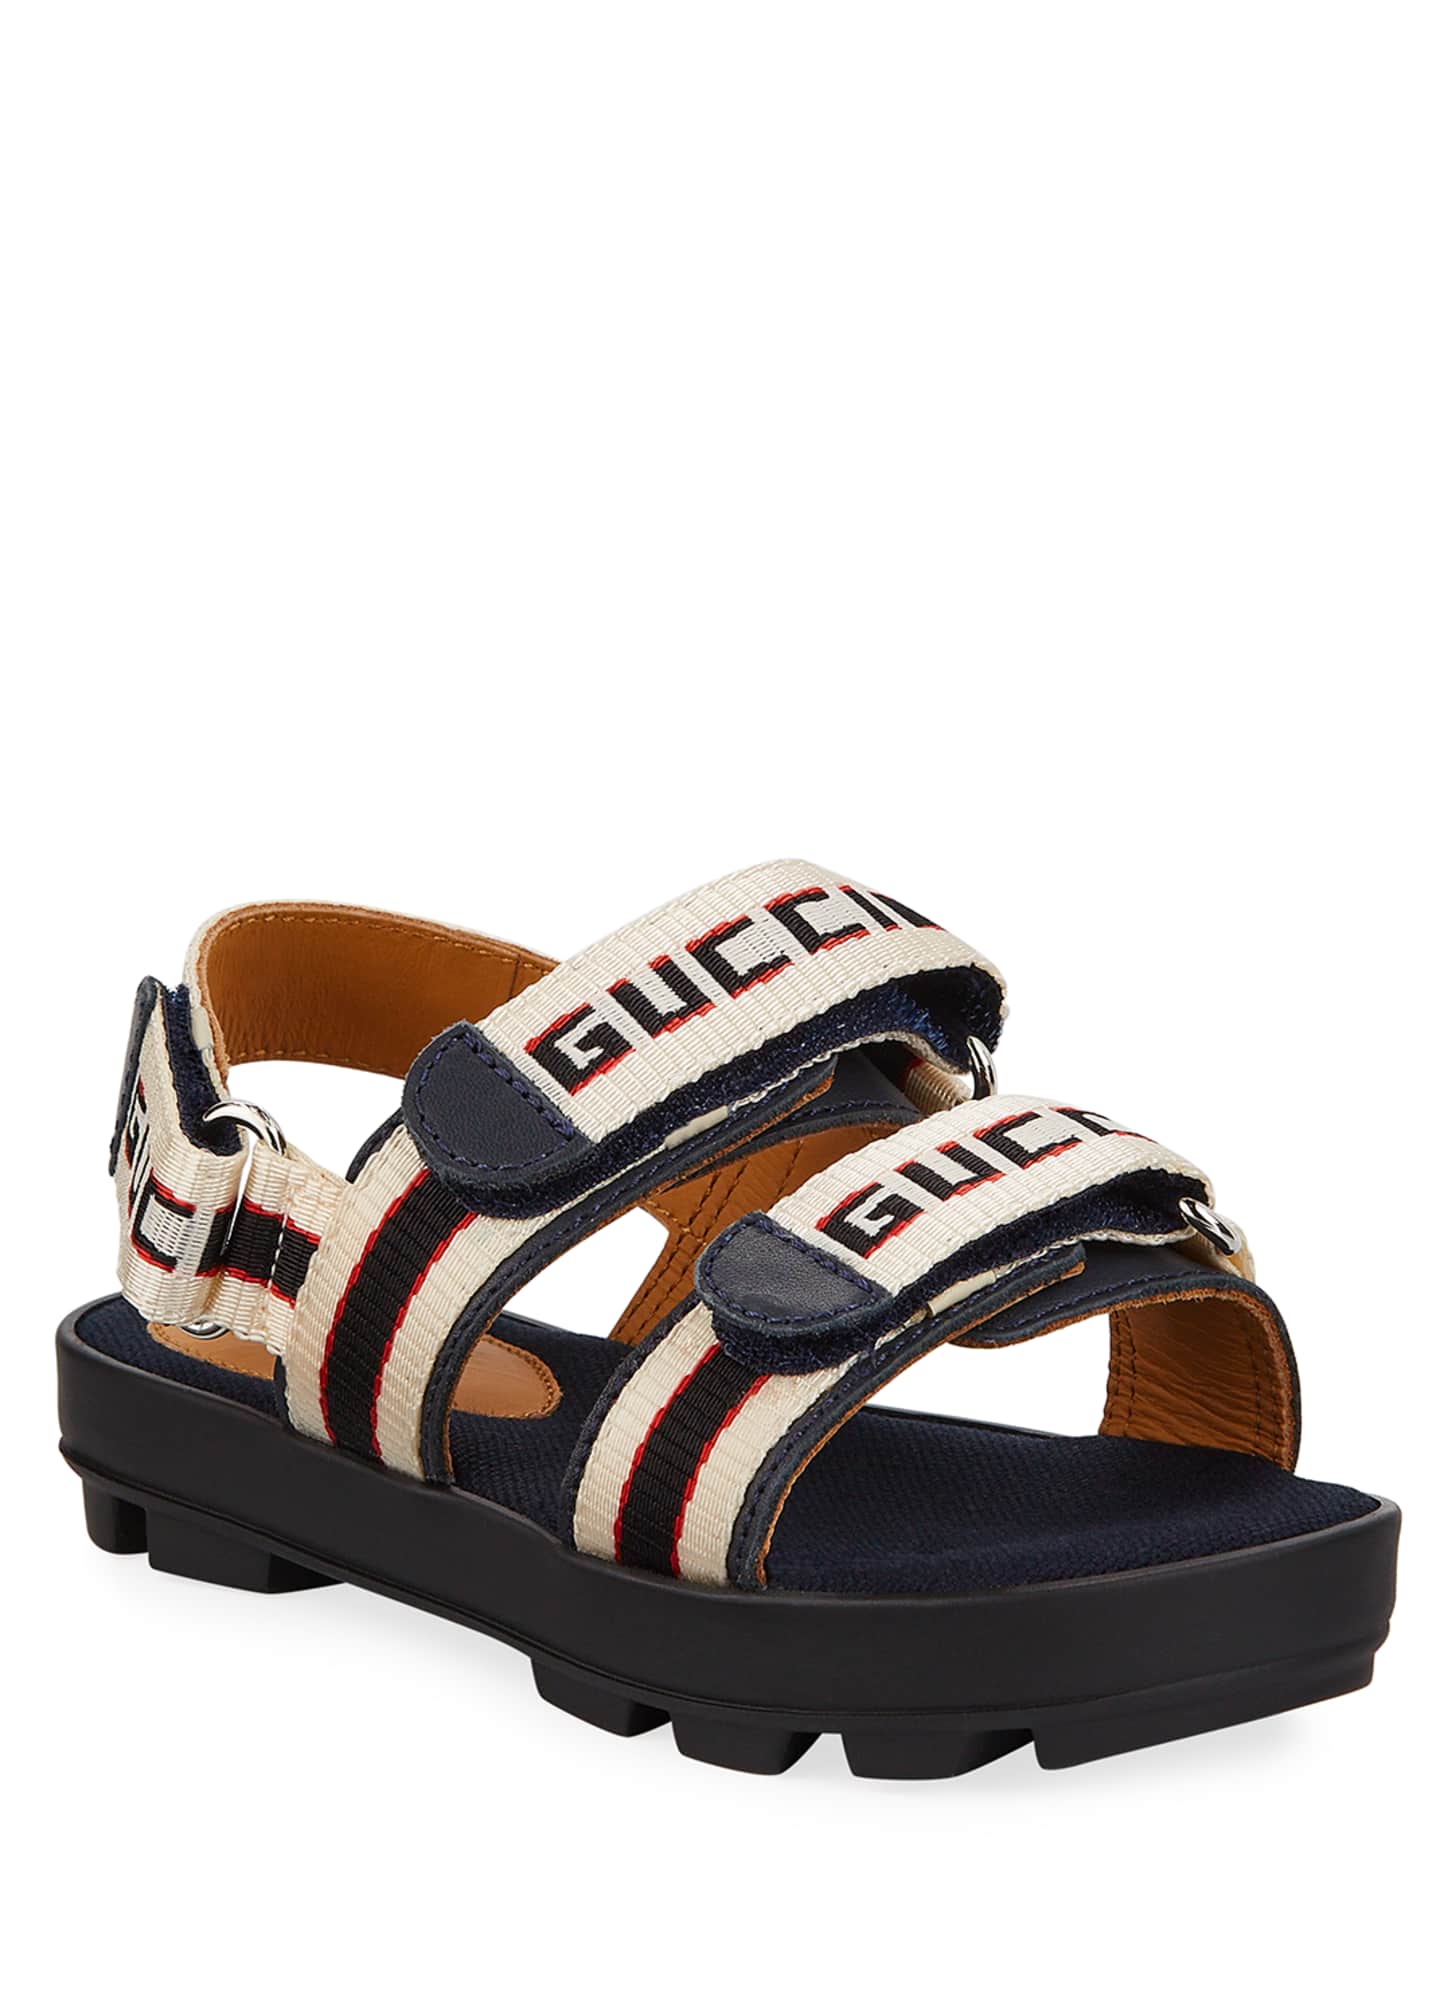 gucci kids sandals - 59% OFF 